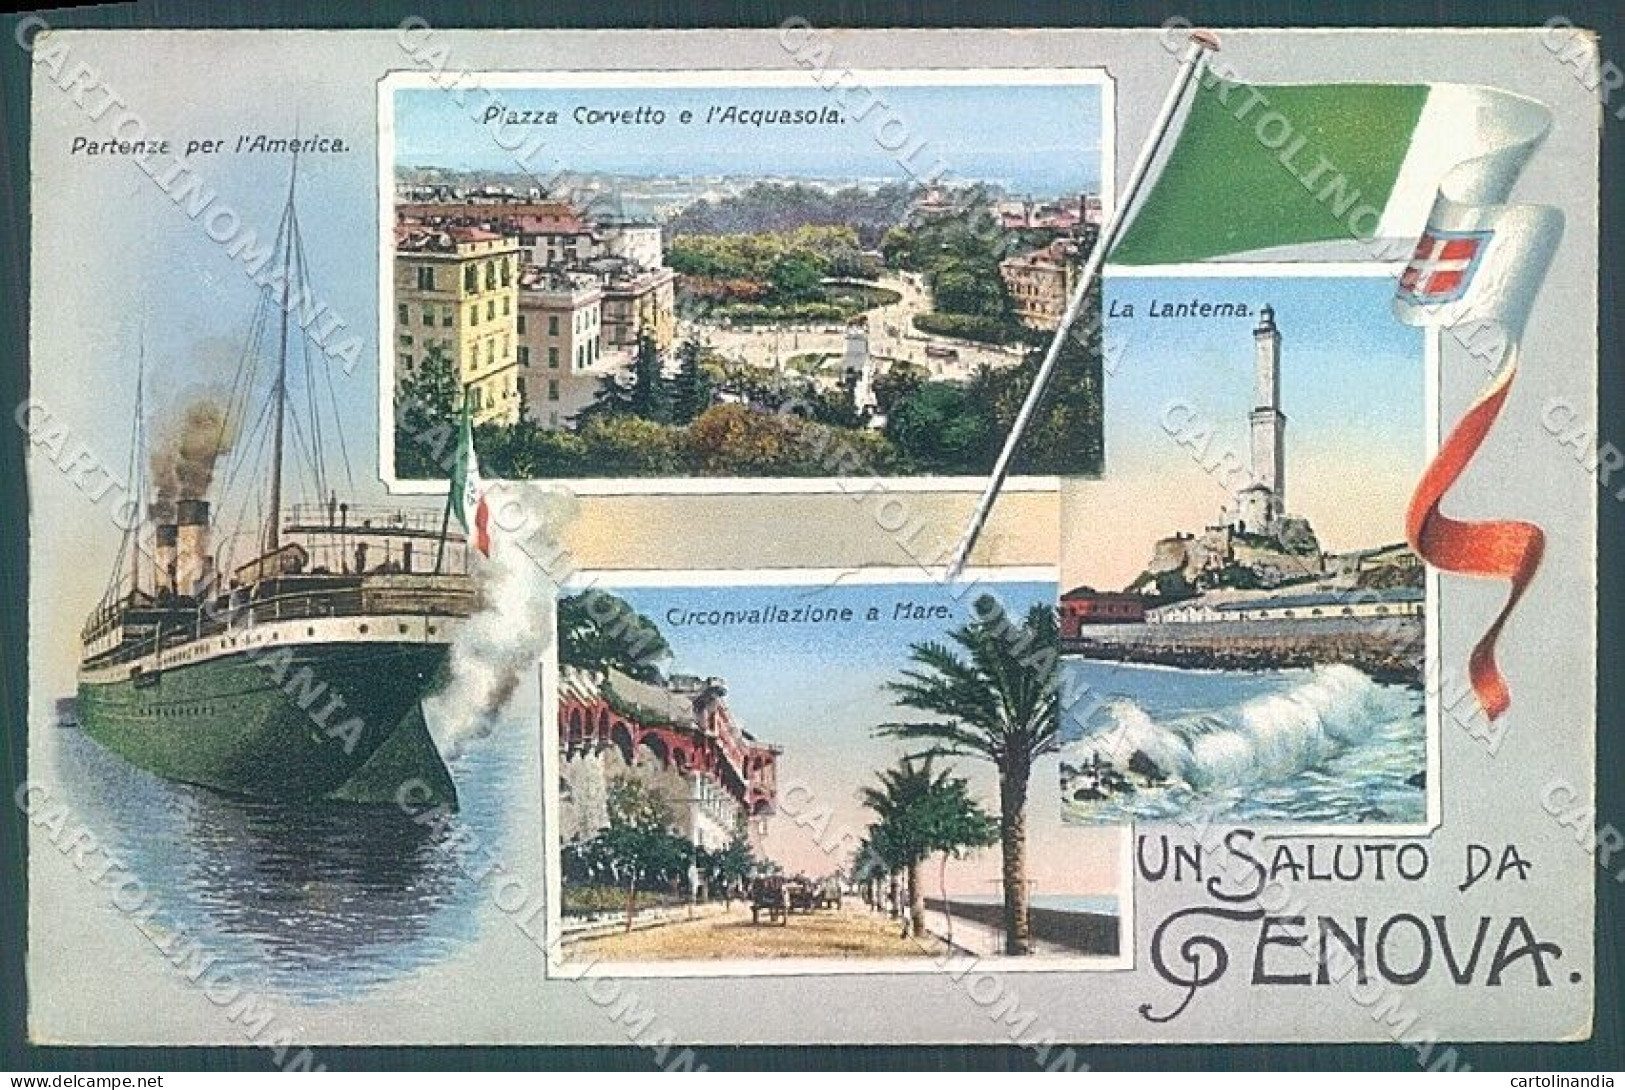 Genova Città Tricolore Nave Lanterna Saluto Da Cartolina JK4757 - Genova (Genoa)